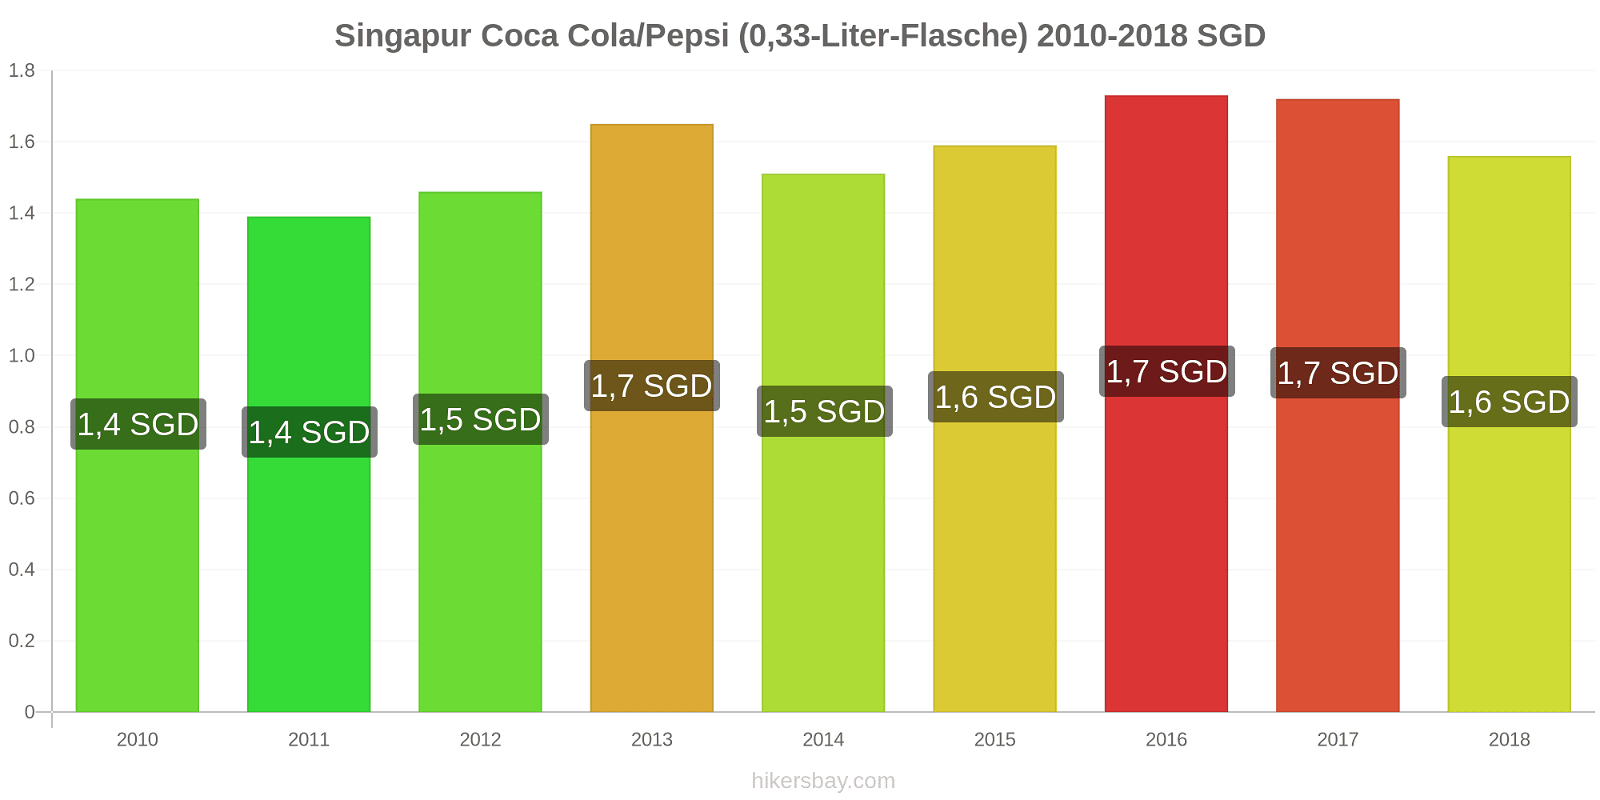 Singapur Preisänderungen Coke/Pepsi (0,33-Liter-Flasche) hikersbay.com